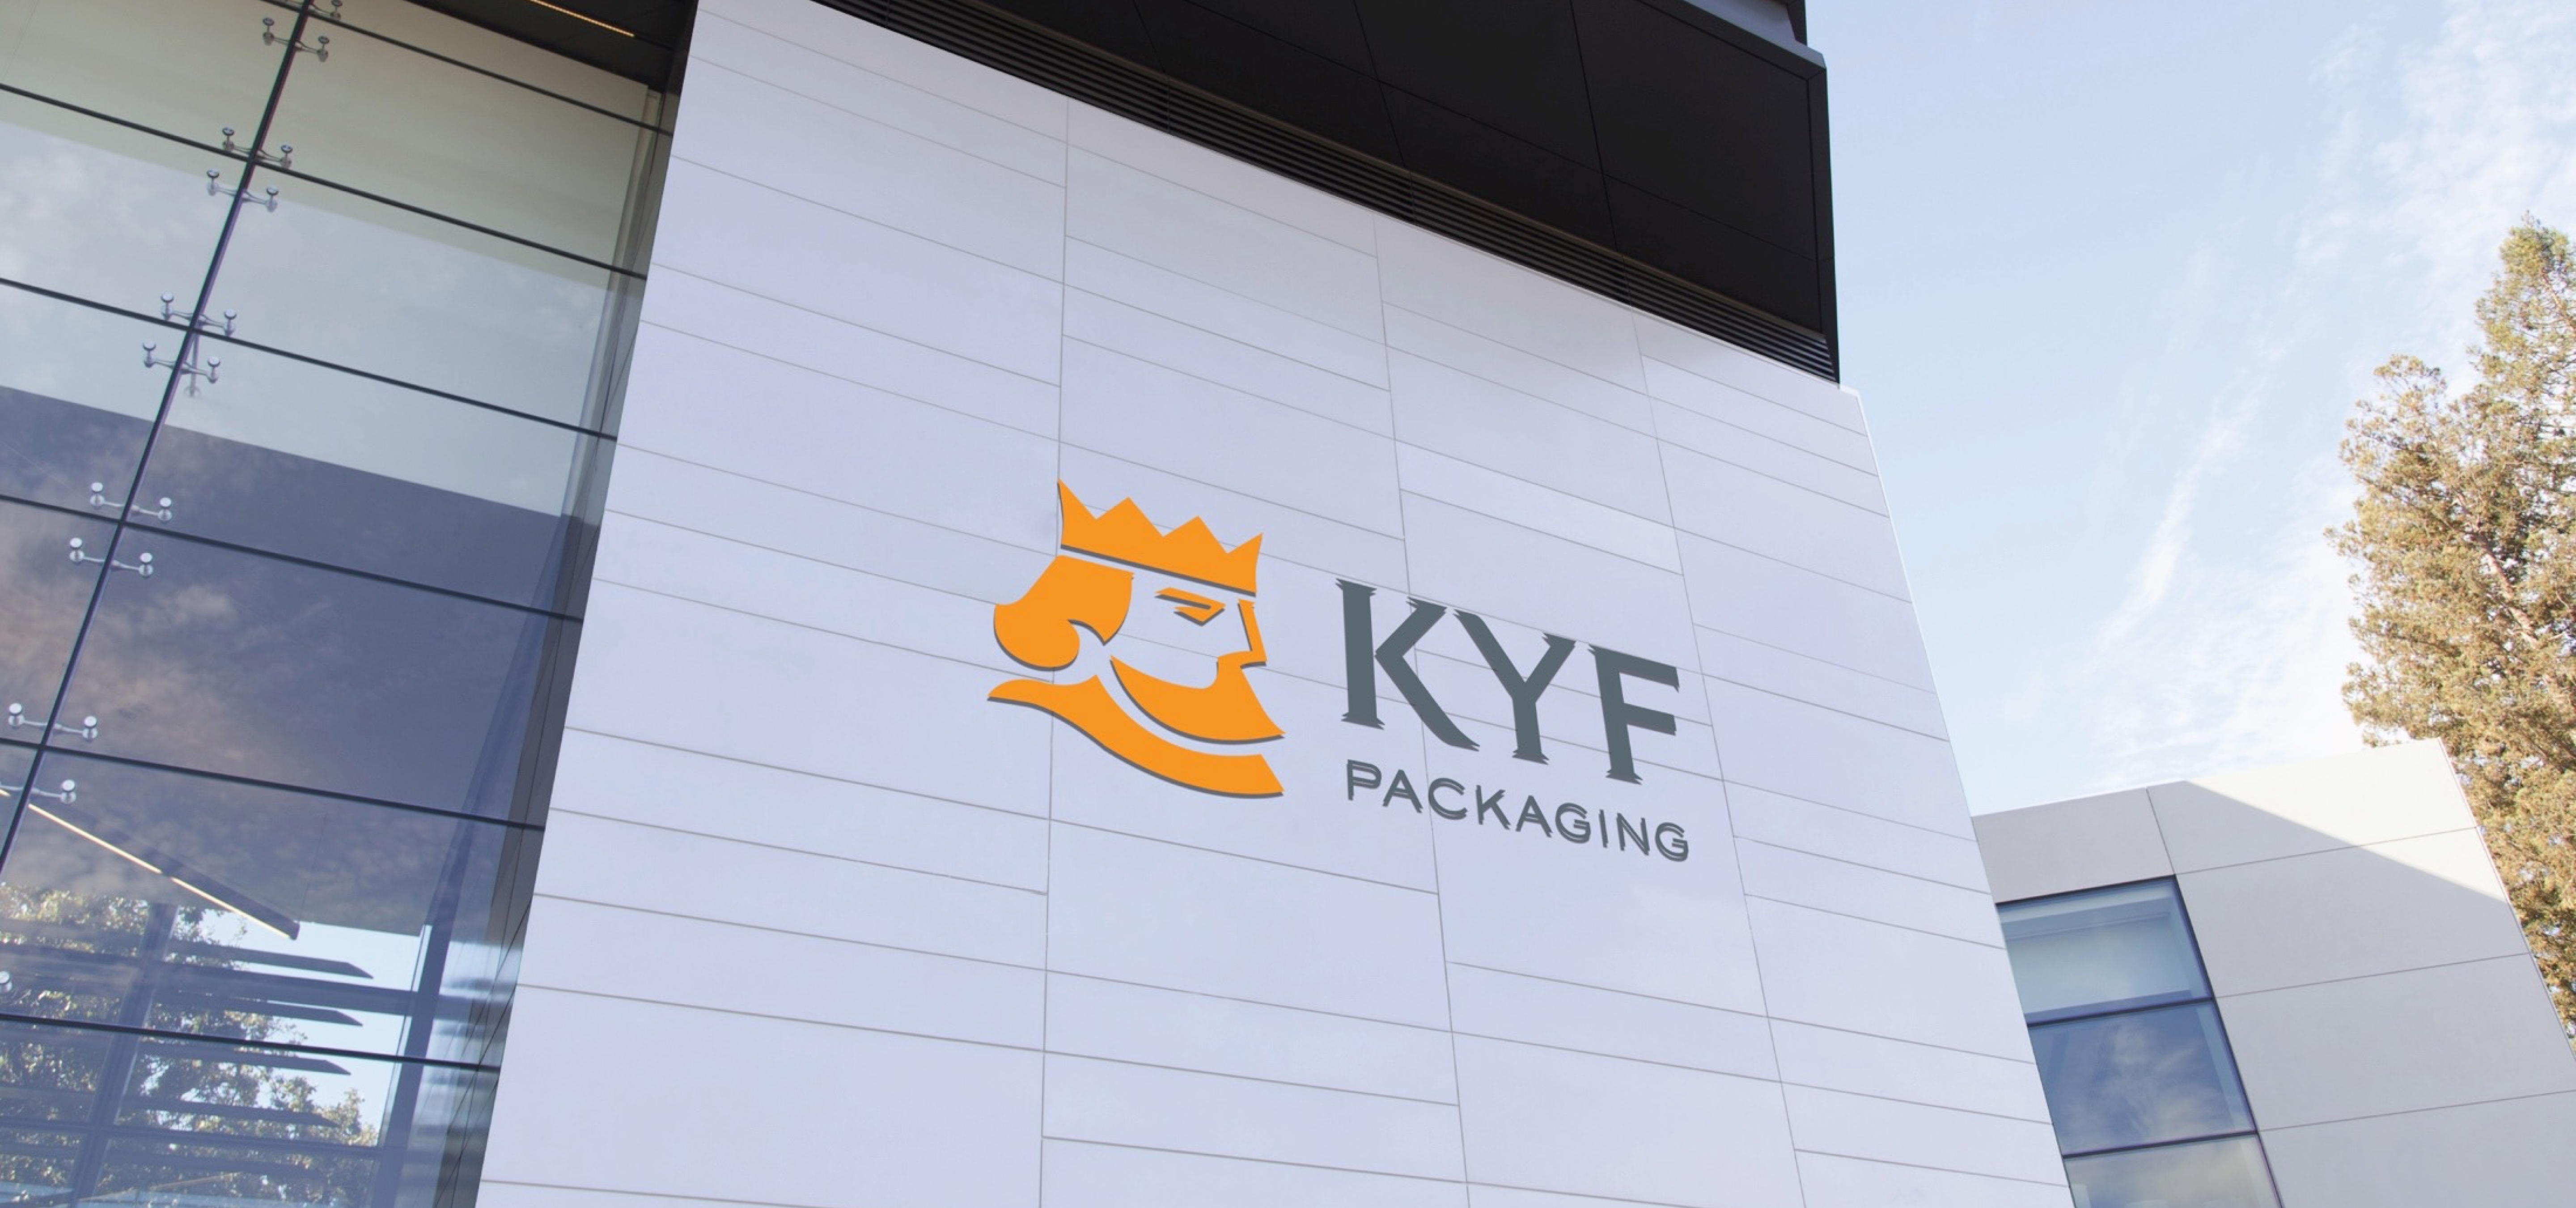 KYF slide05 | 金元福企業識別形象更新專案 | Labsology 法博思品牌顧問公司